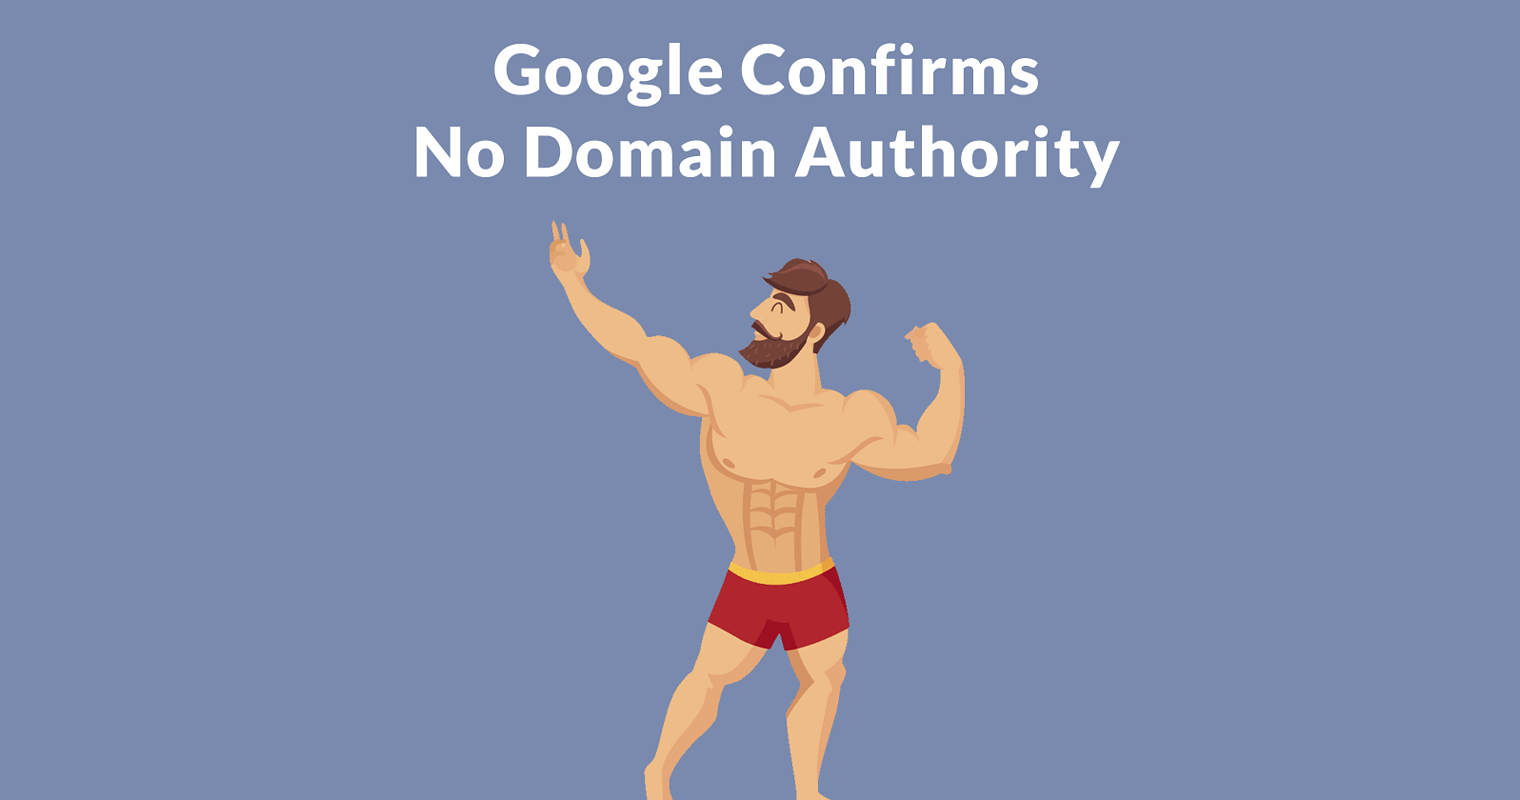 John Mueller Rebuts Idea that Google Uses Domain Authority Signal